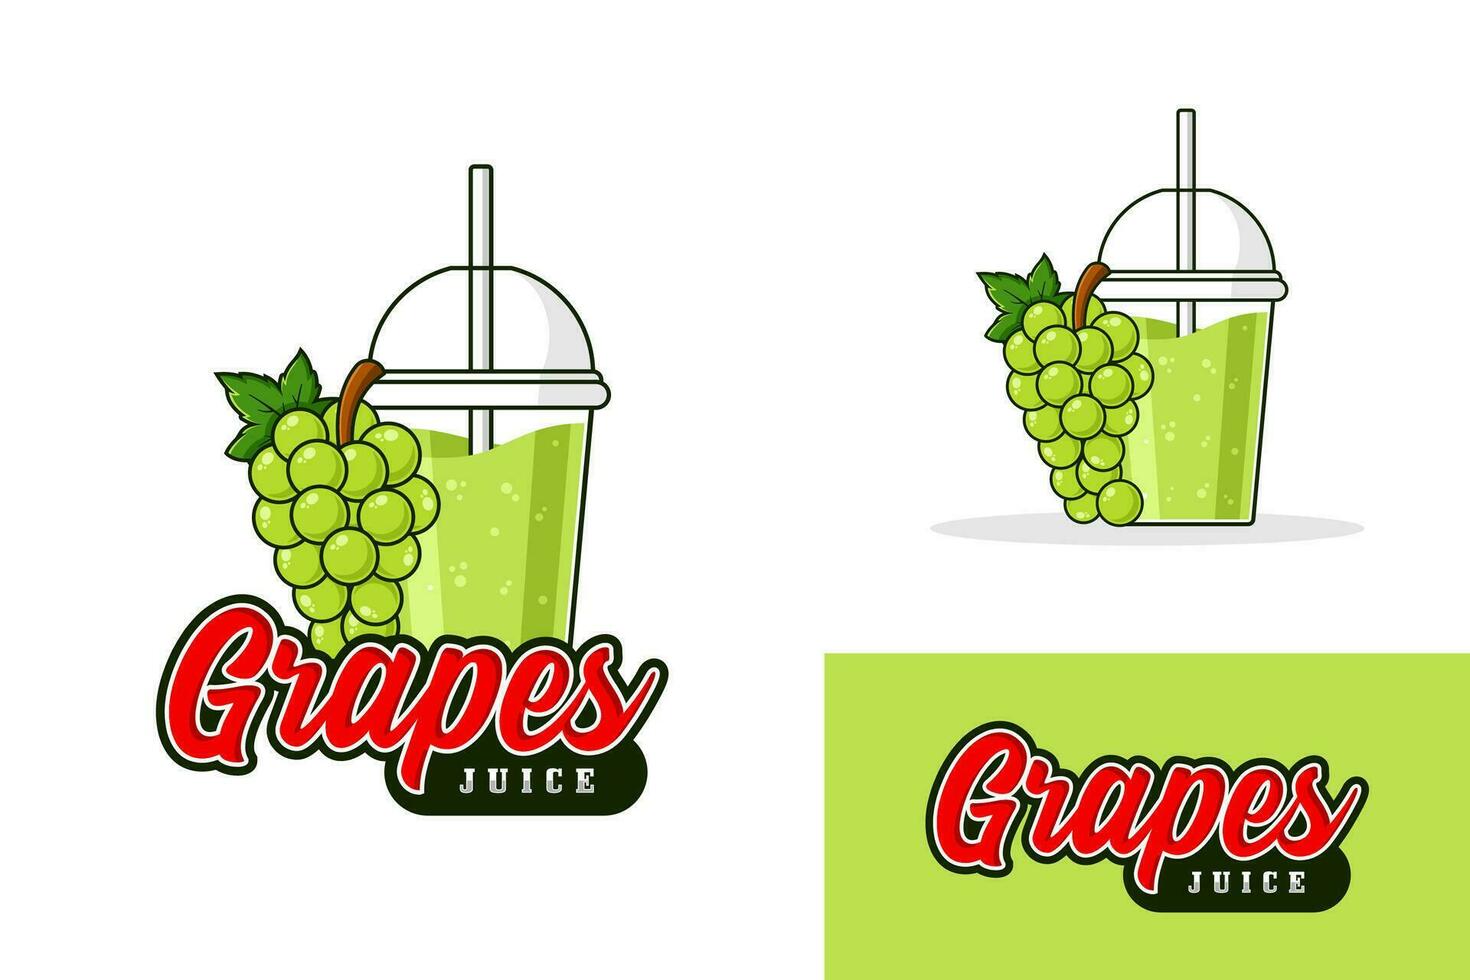 Green grapes juice drink logo design illustration collection vector